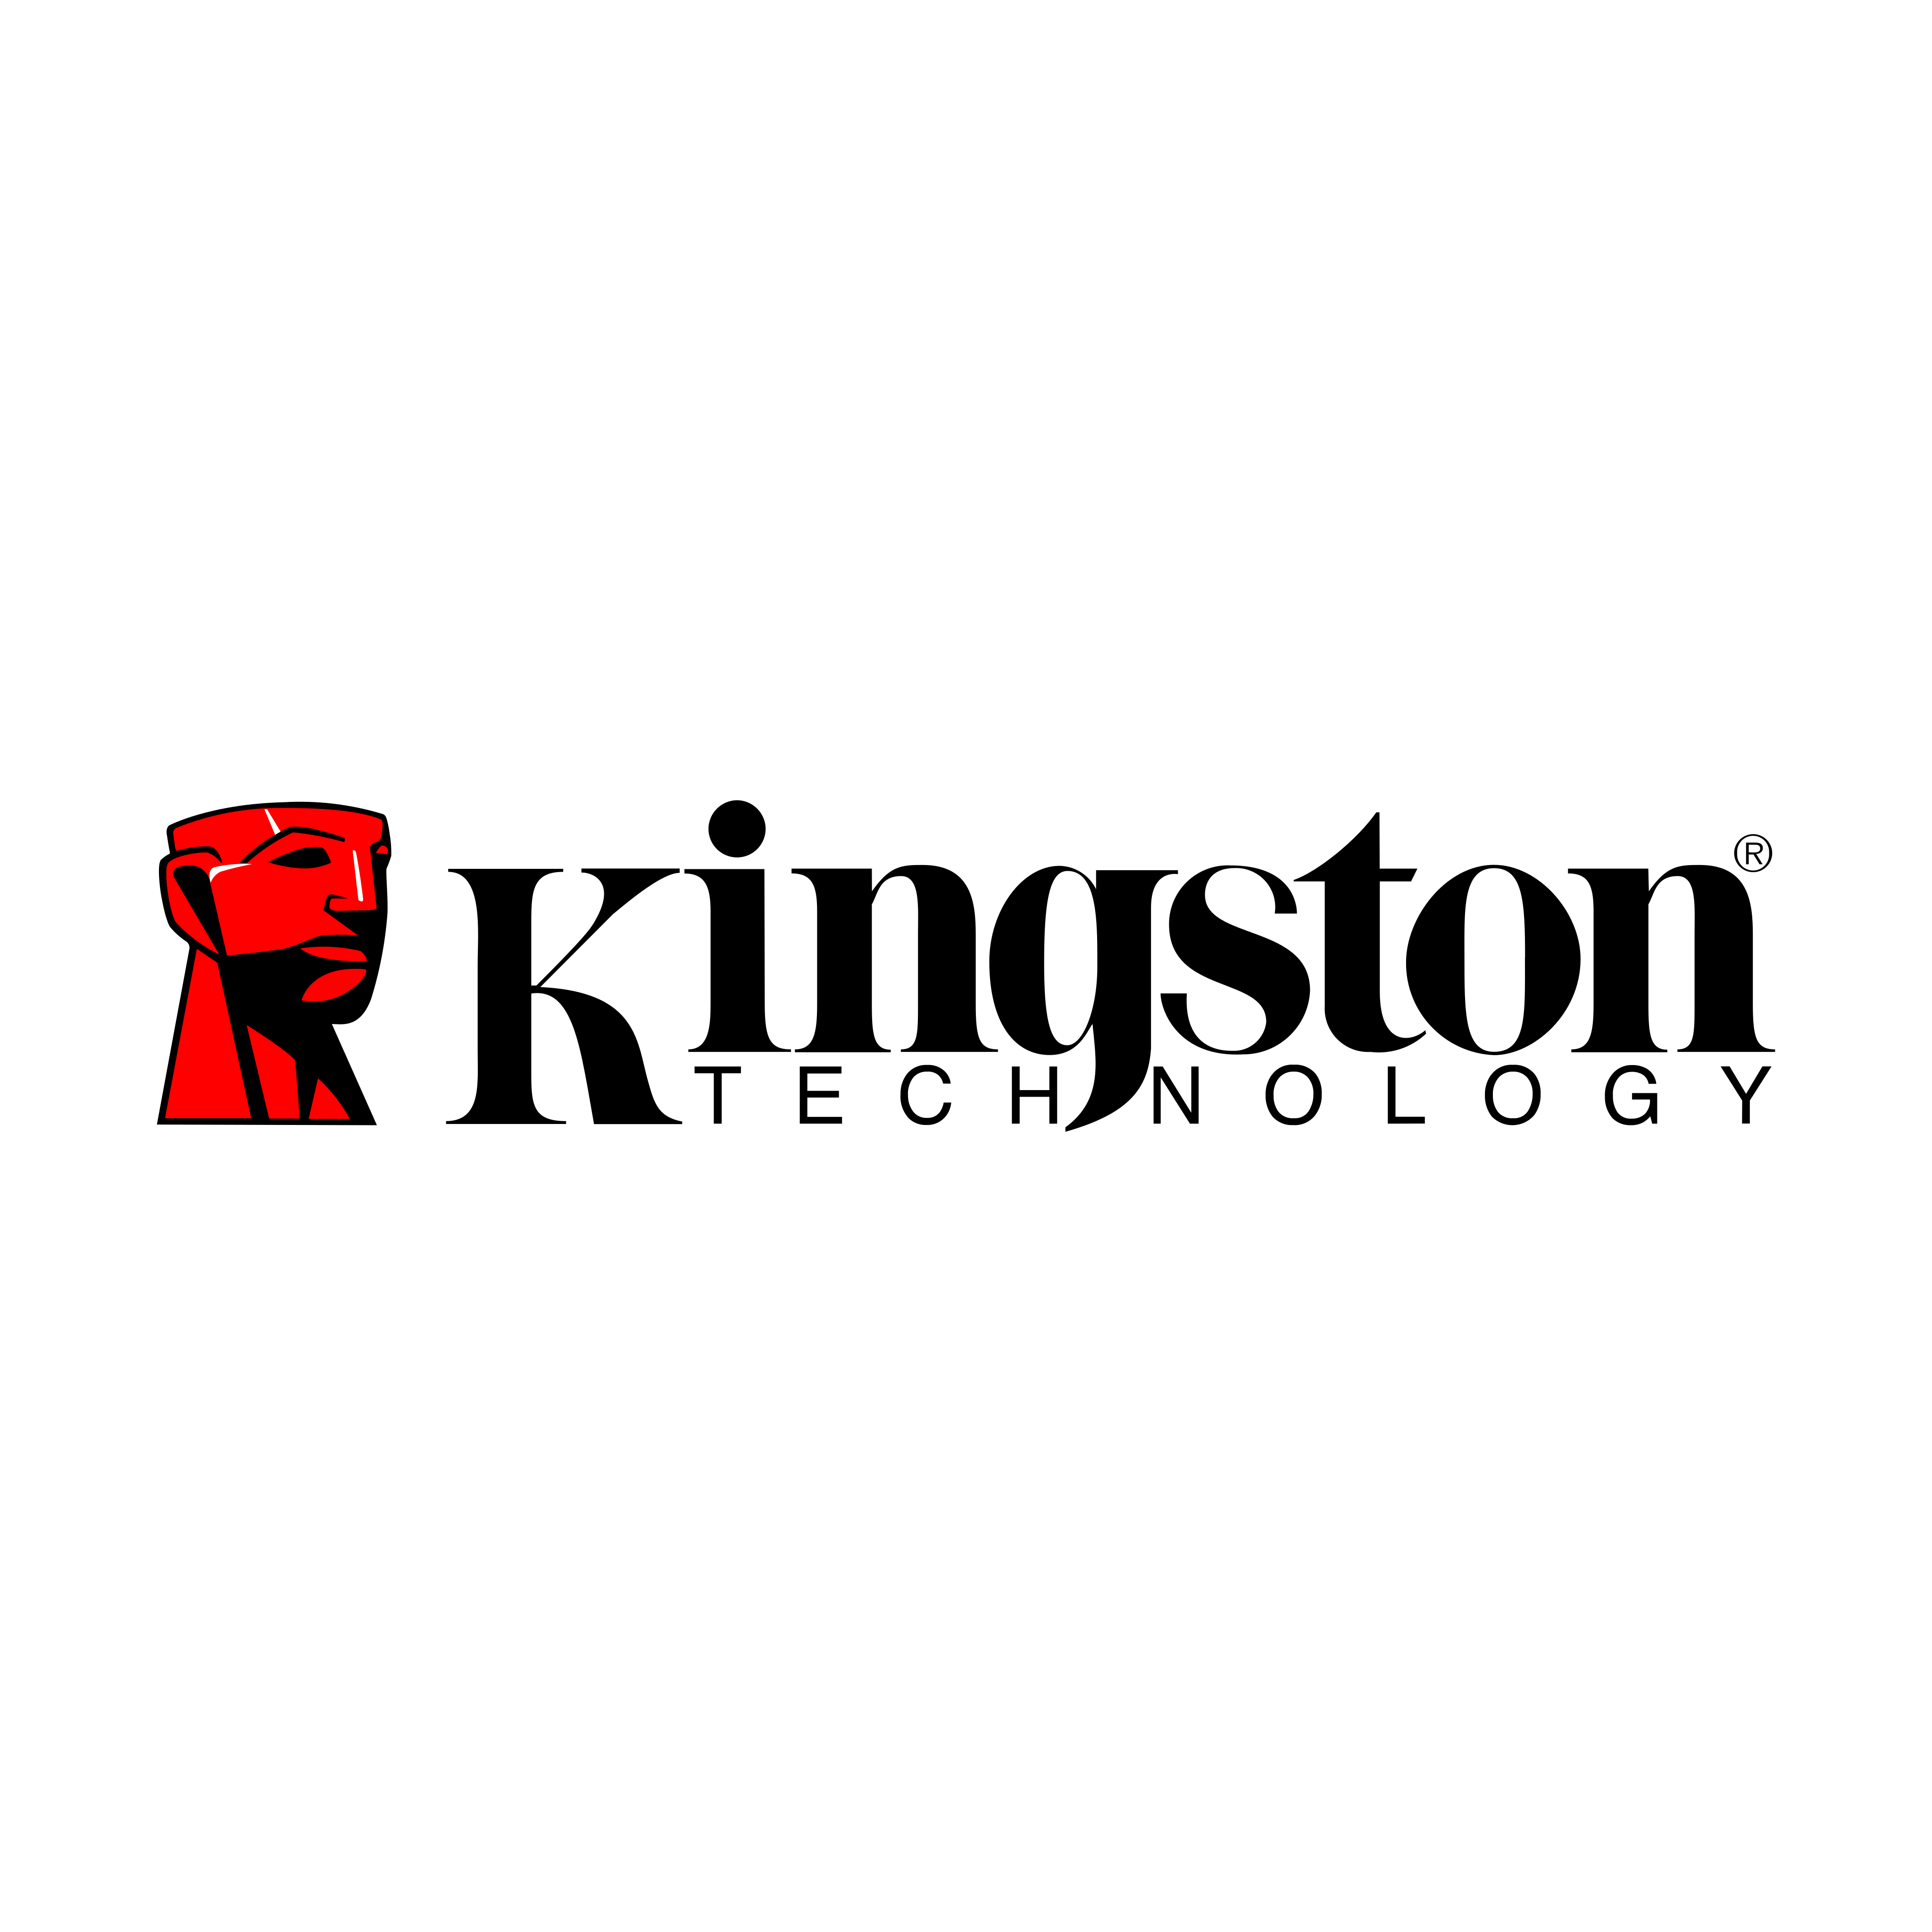 kingston logo 0 - Kingston Logo